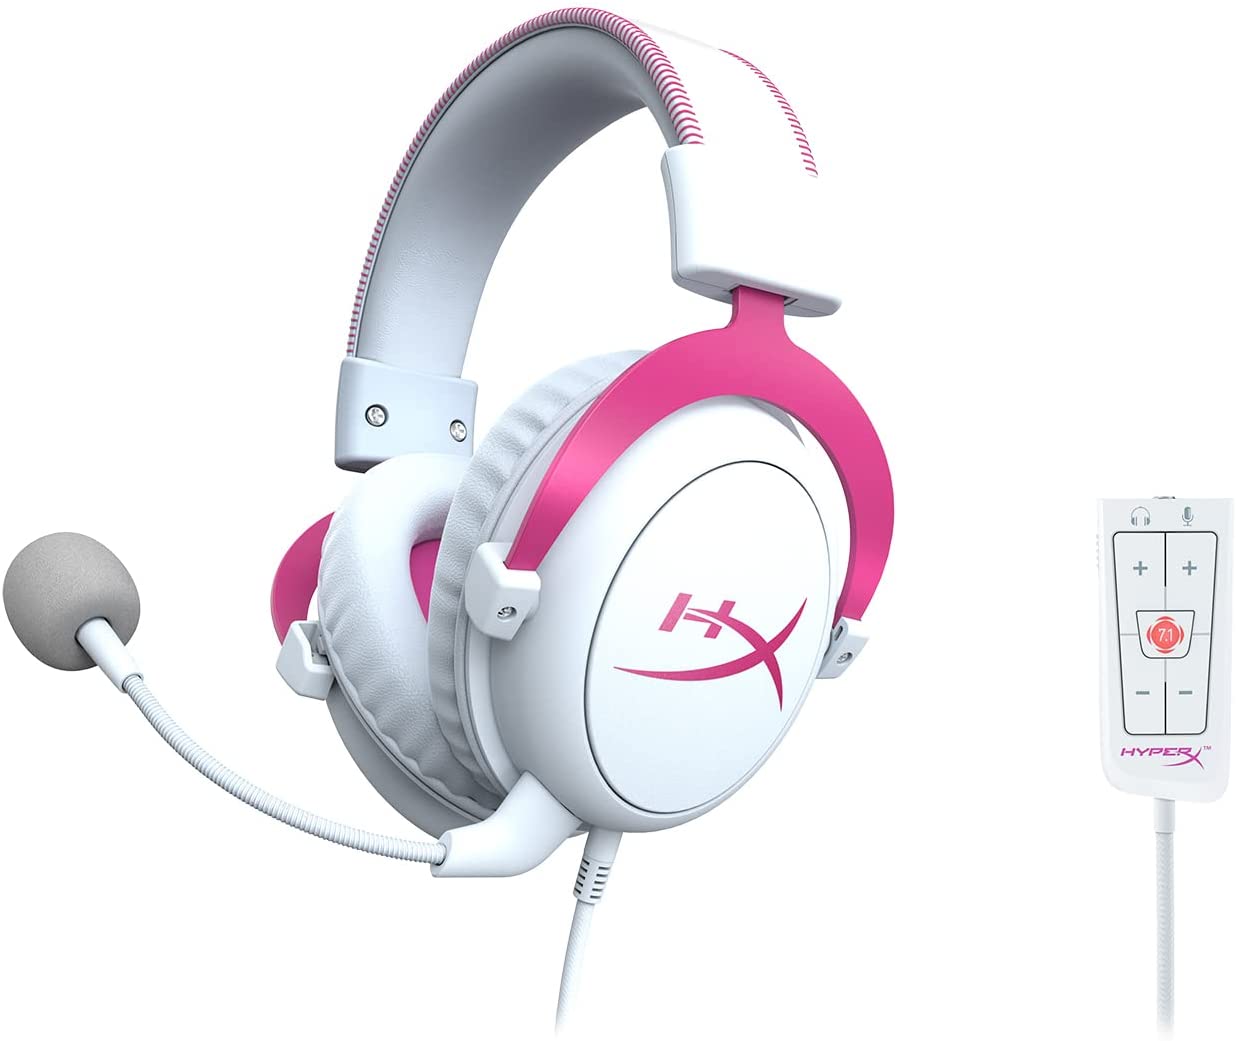 Hyperx Cloud Ii Wired Headset Pink White Render